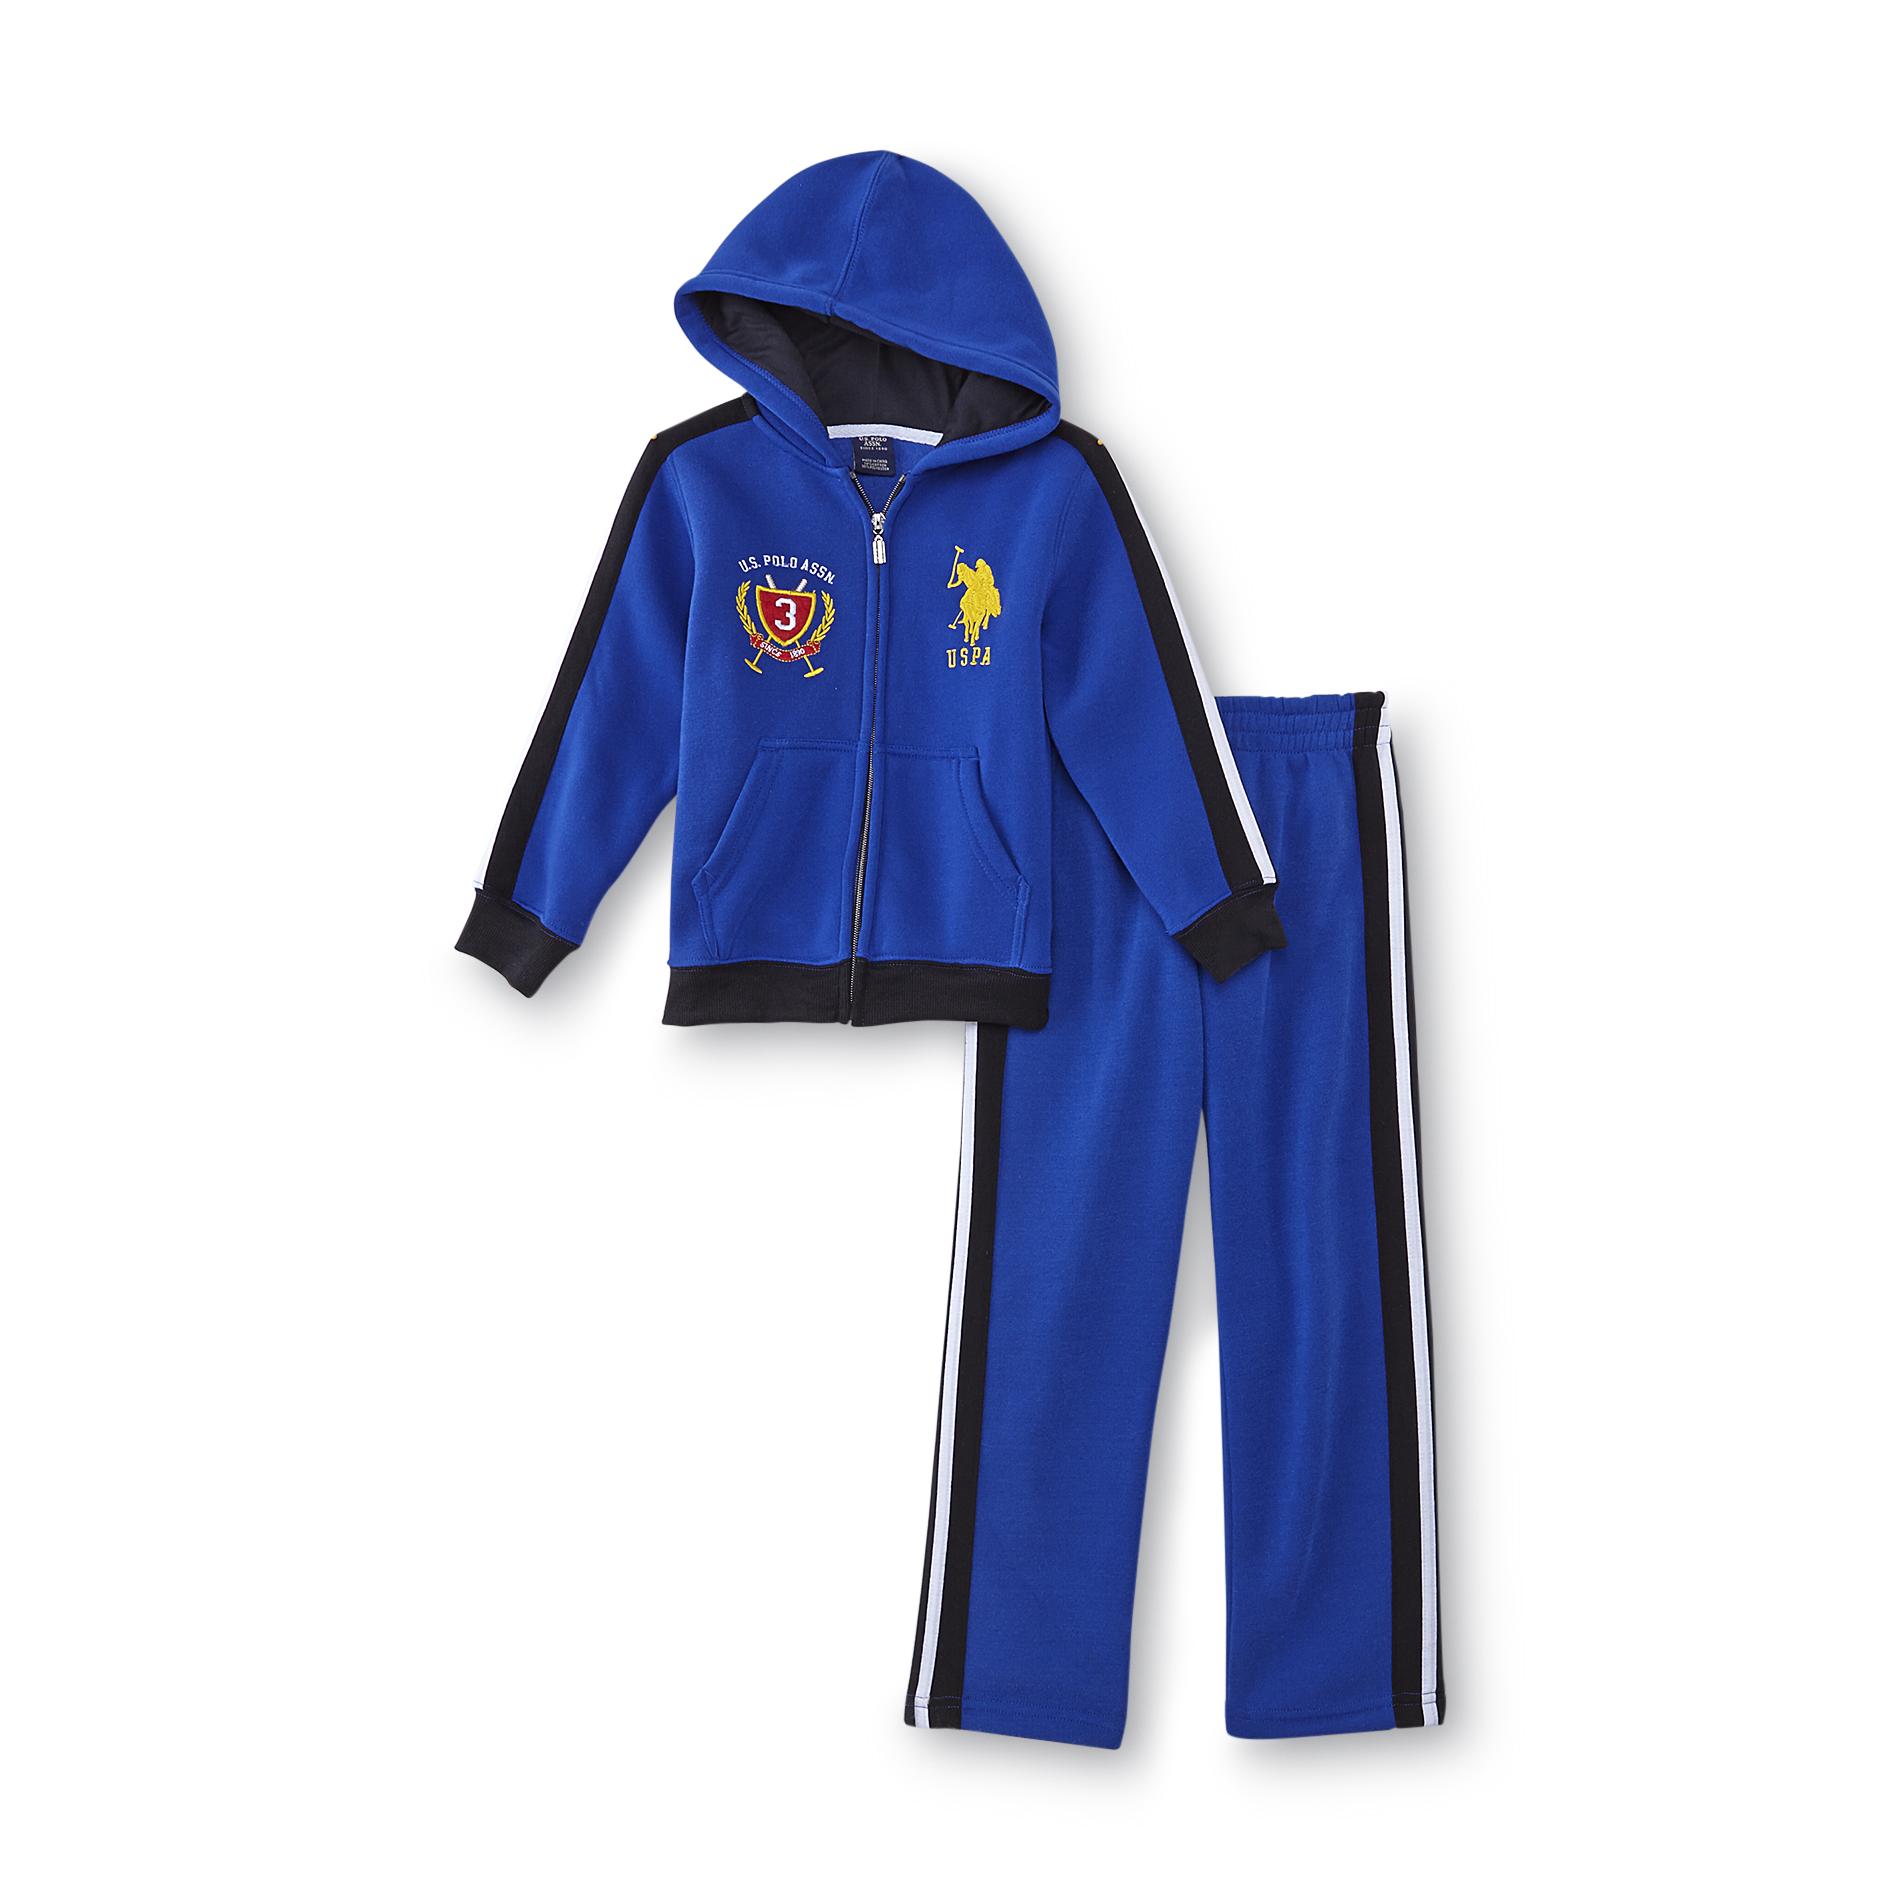 U.S. Polo Assn. Boy's Fleece-Lined Hoodie Jacket & Sweatpants